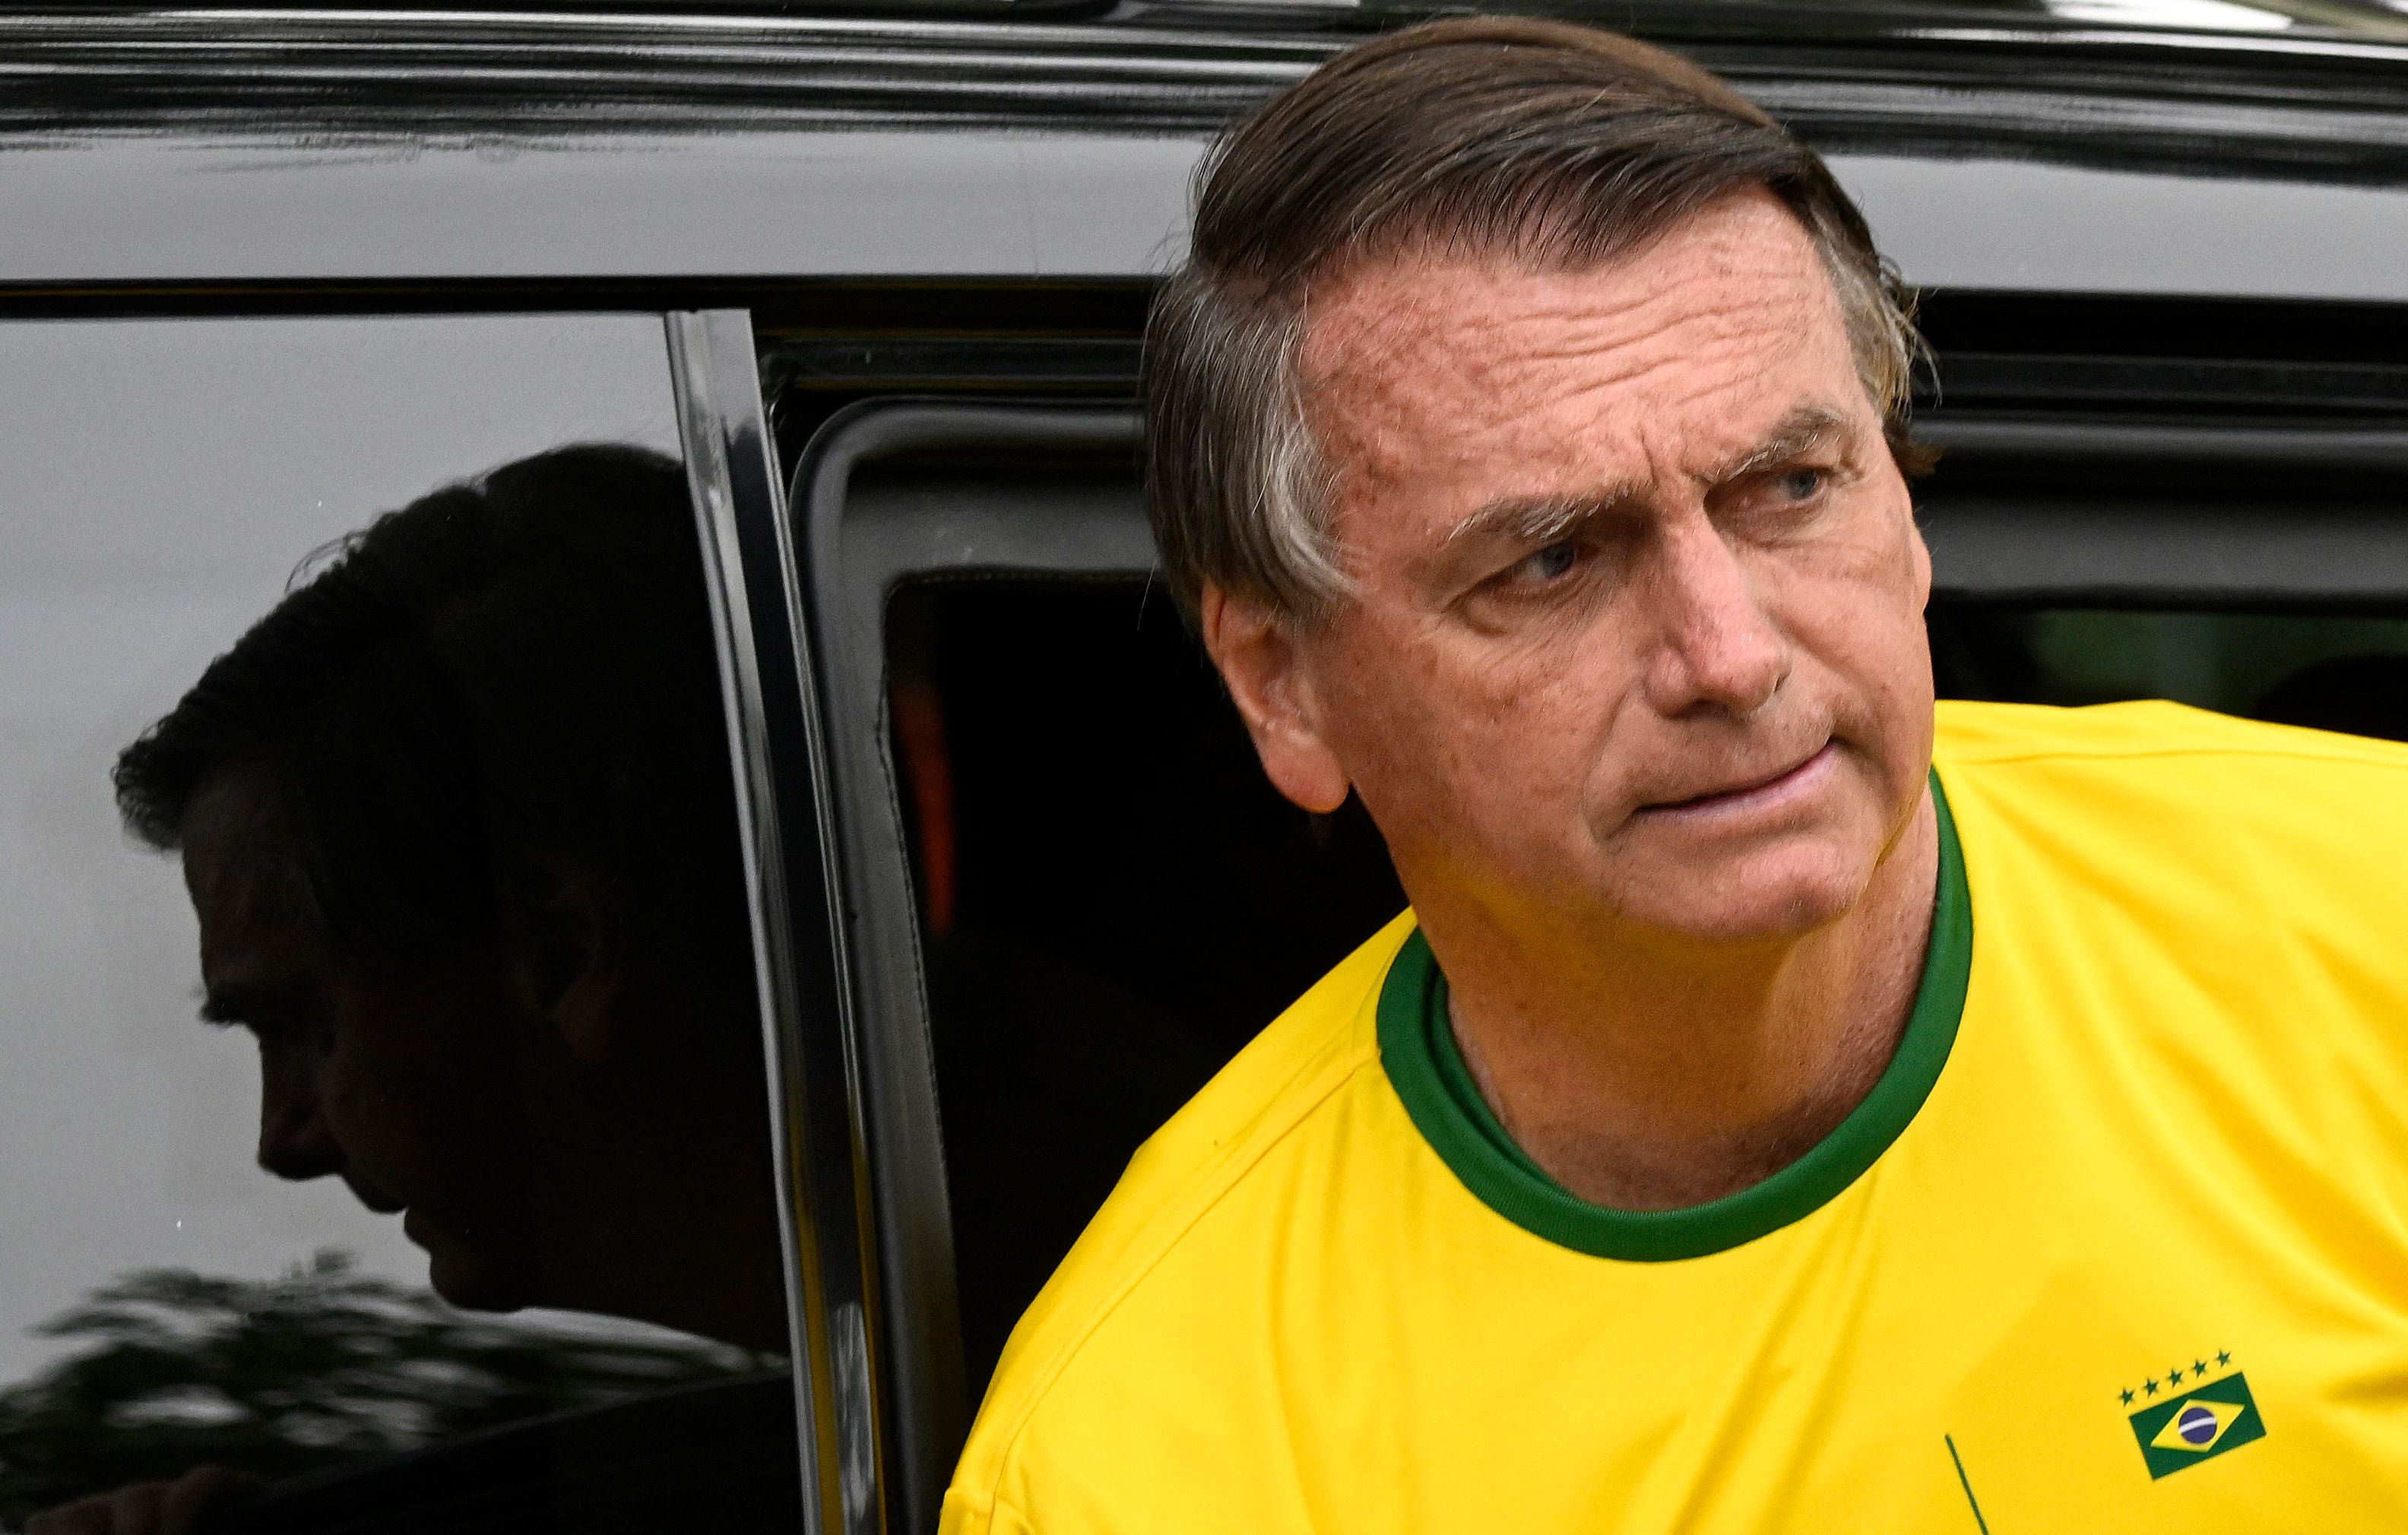 Jair Bolsonaro arrives at a polling station on Sunday